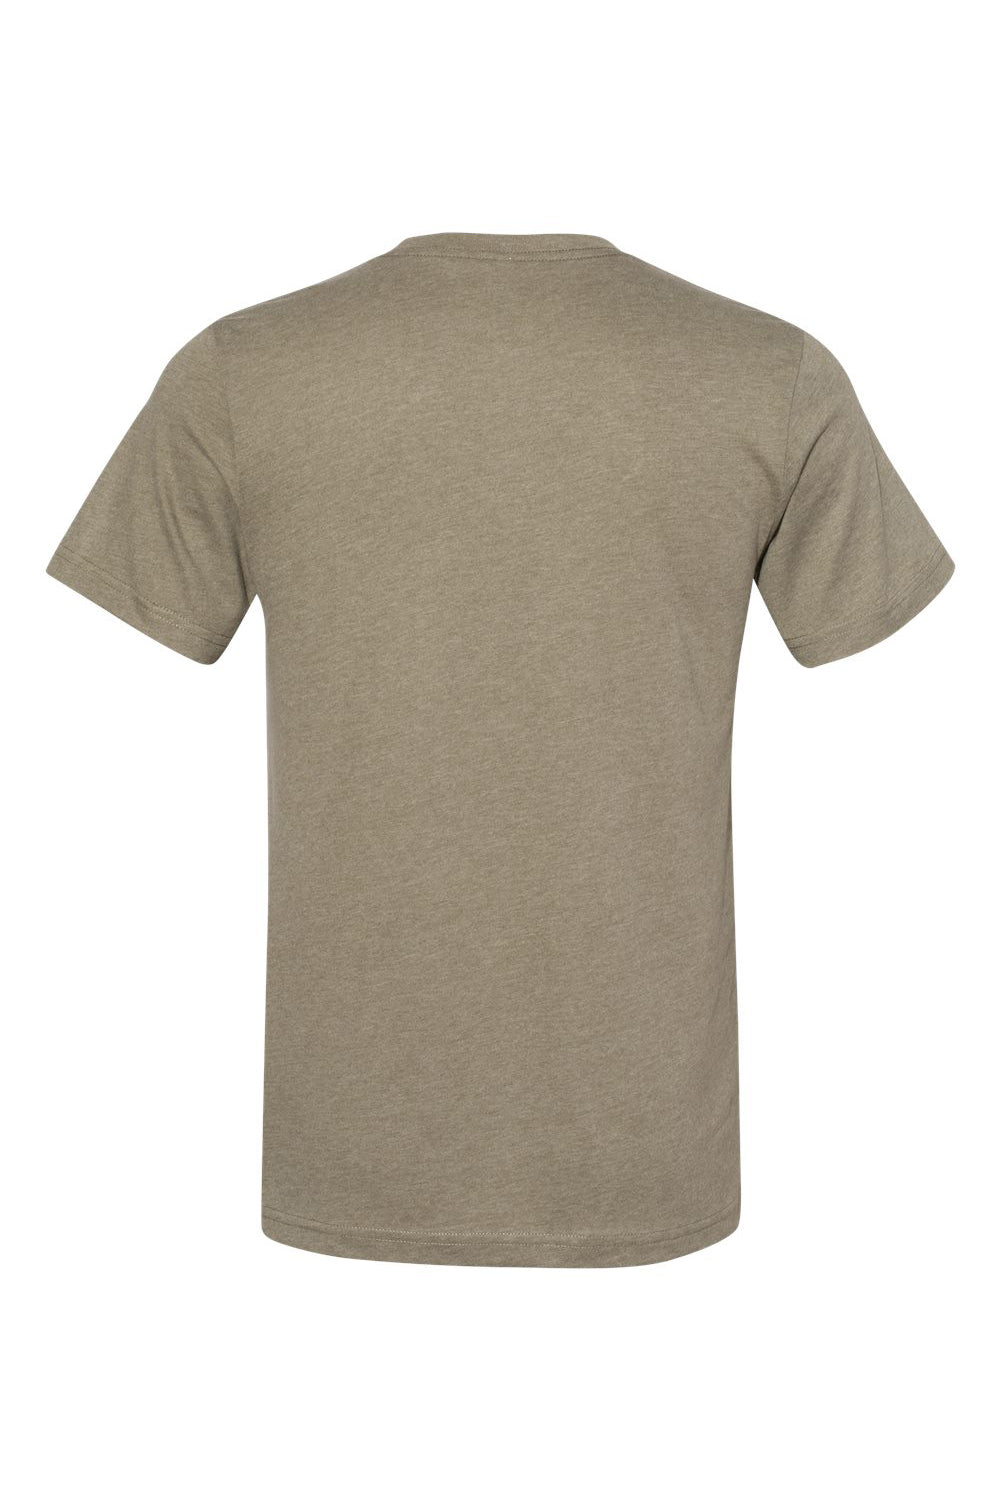 Bella + Canvas BC3301/3301C/3301 Mens Jersey Short Sleeve Crewneck T-Shirt Heather Olive Green Flat Back